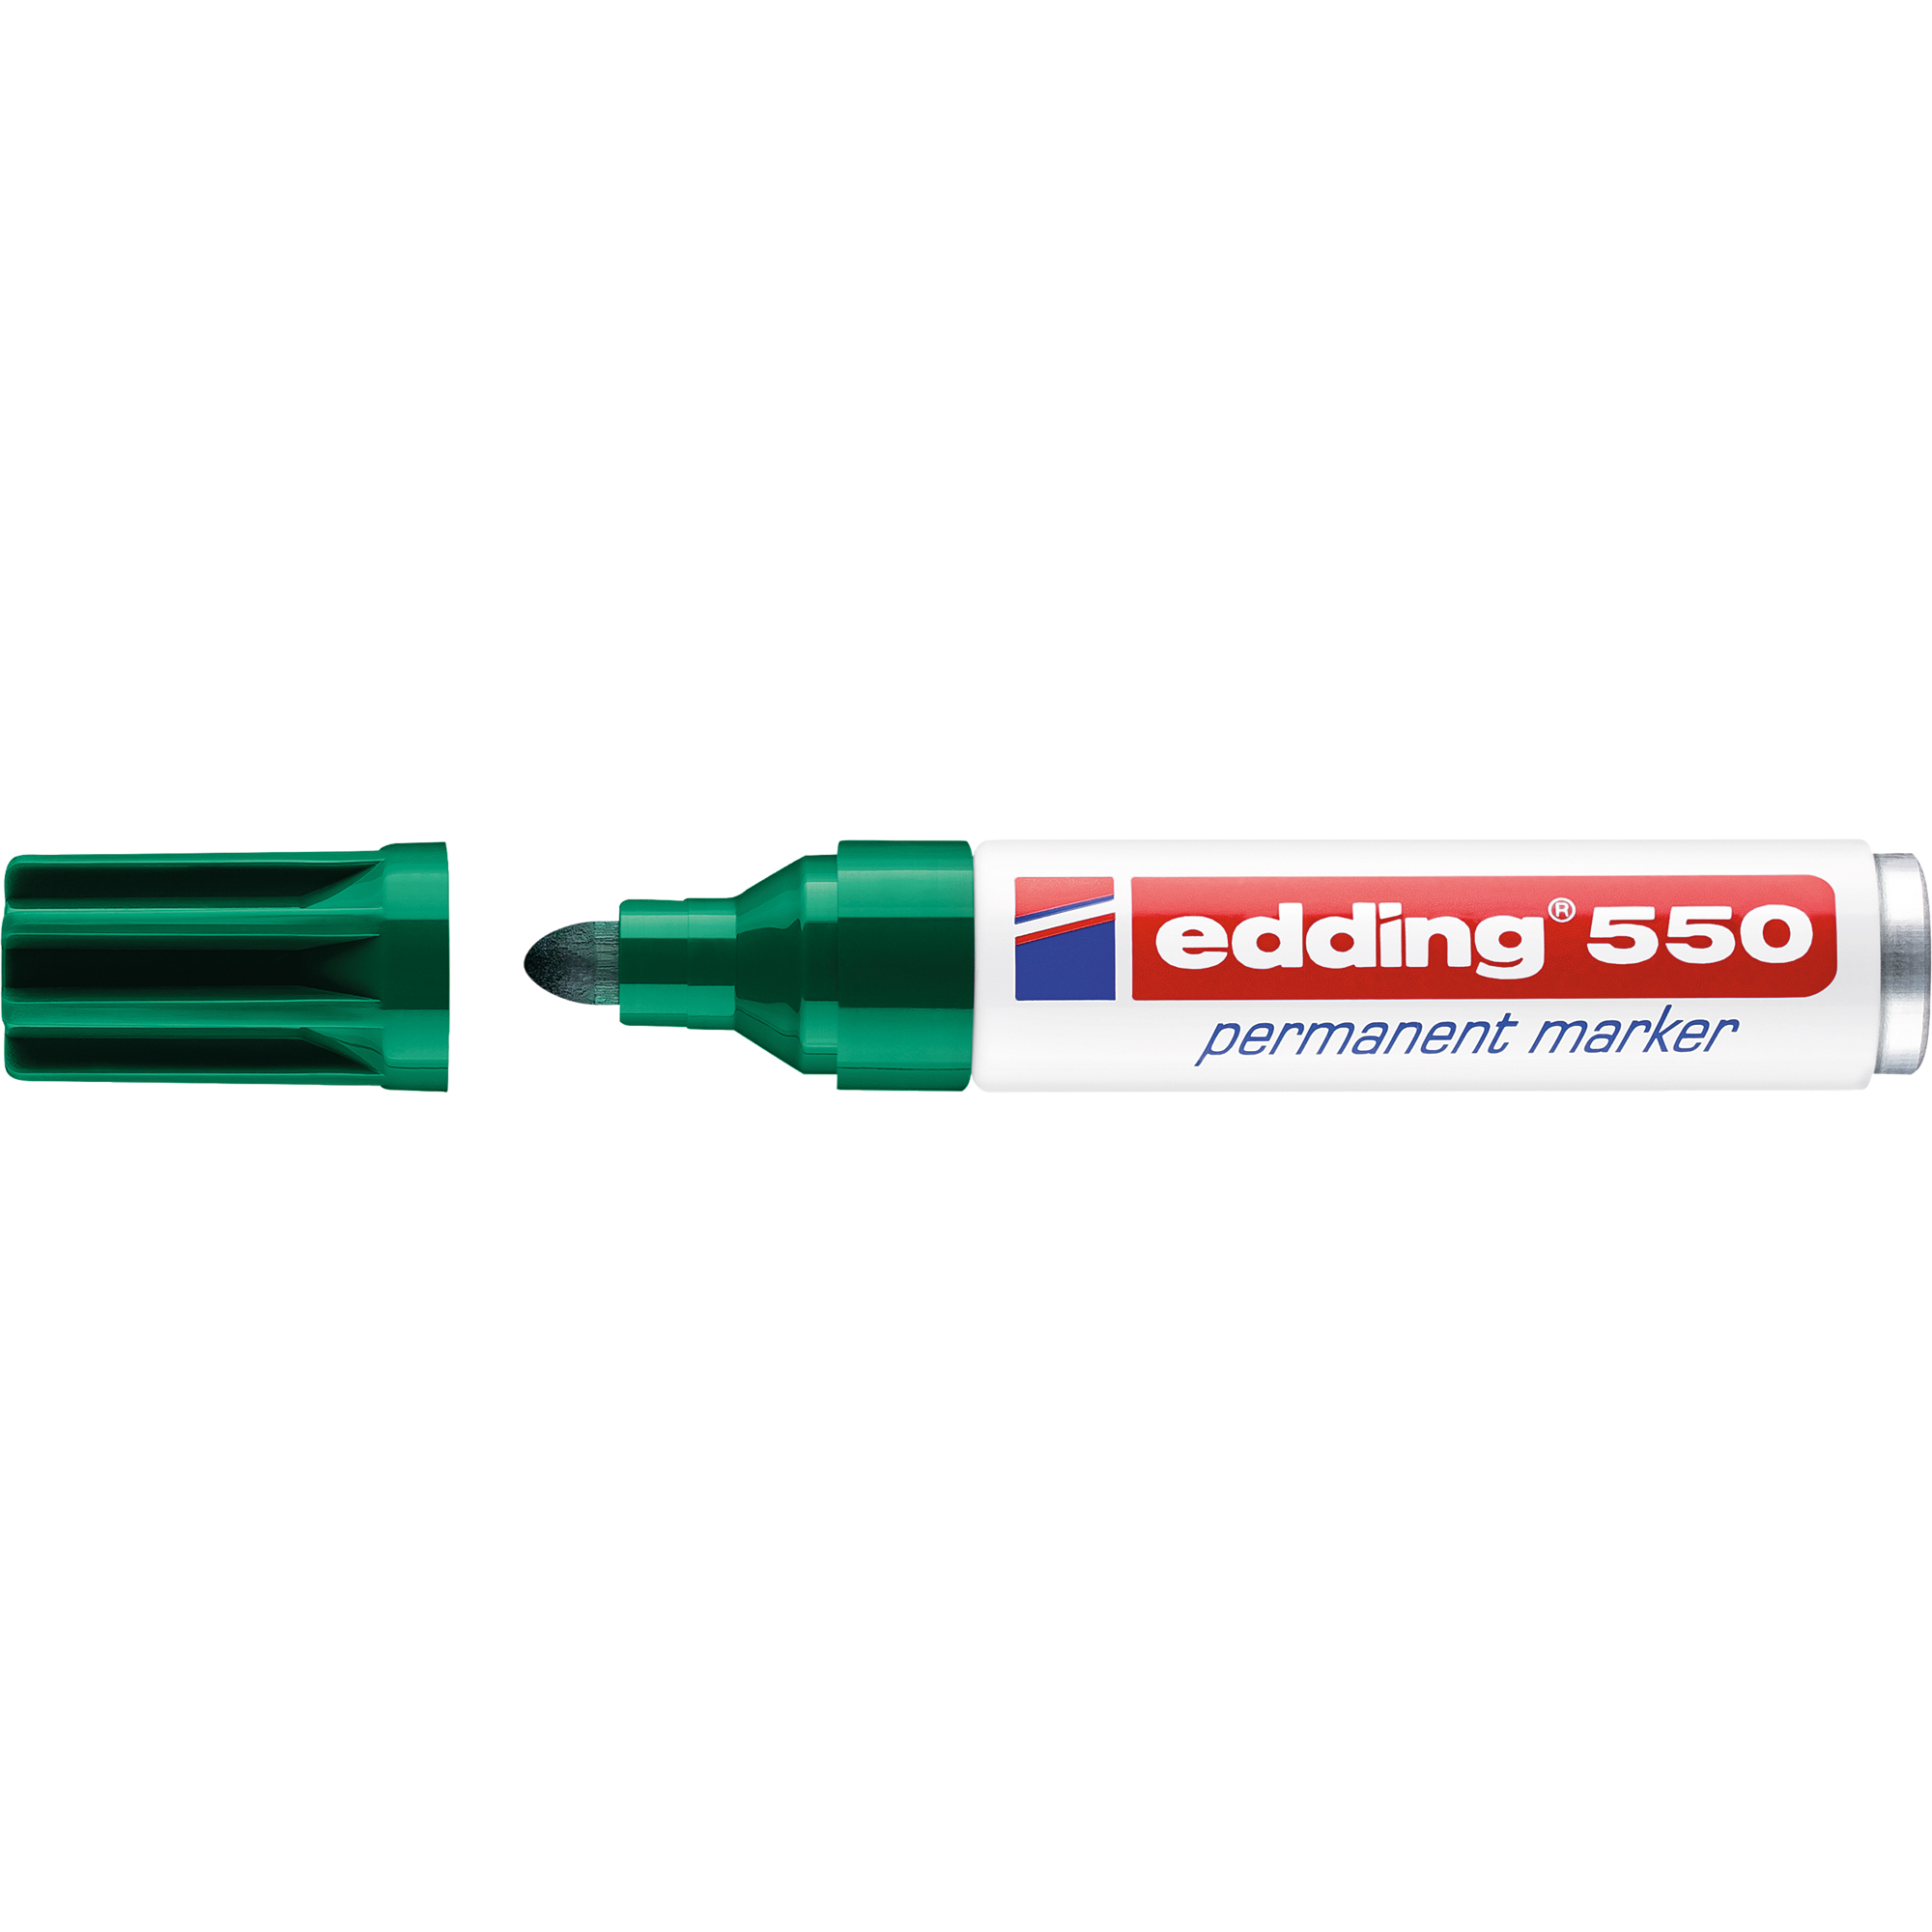 EDDING Permanentmarker 550 Permanentmarker, grün nachfüllbar Rundspitze 3-4mm